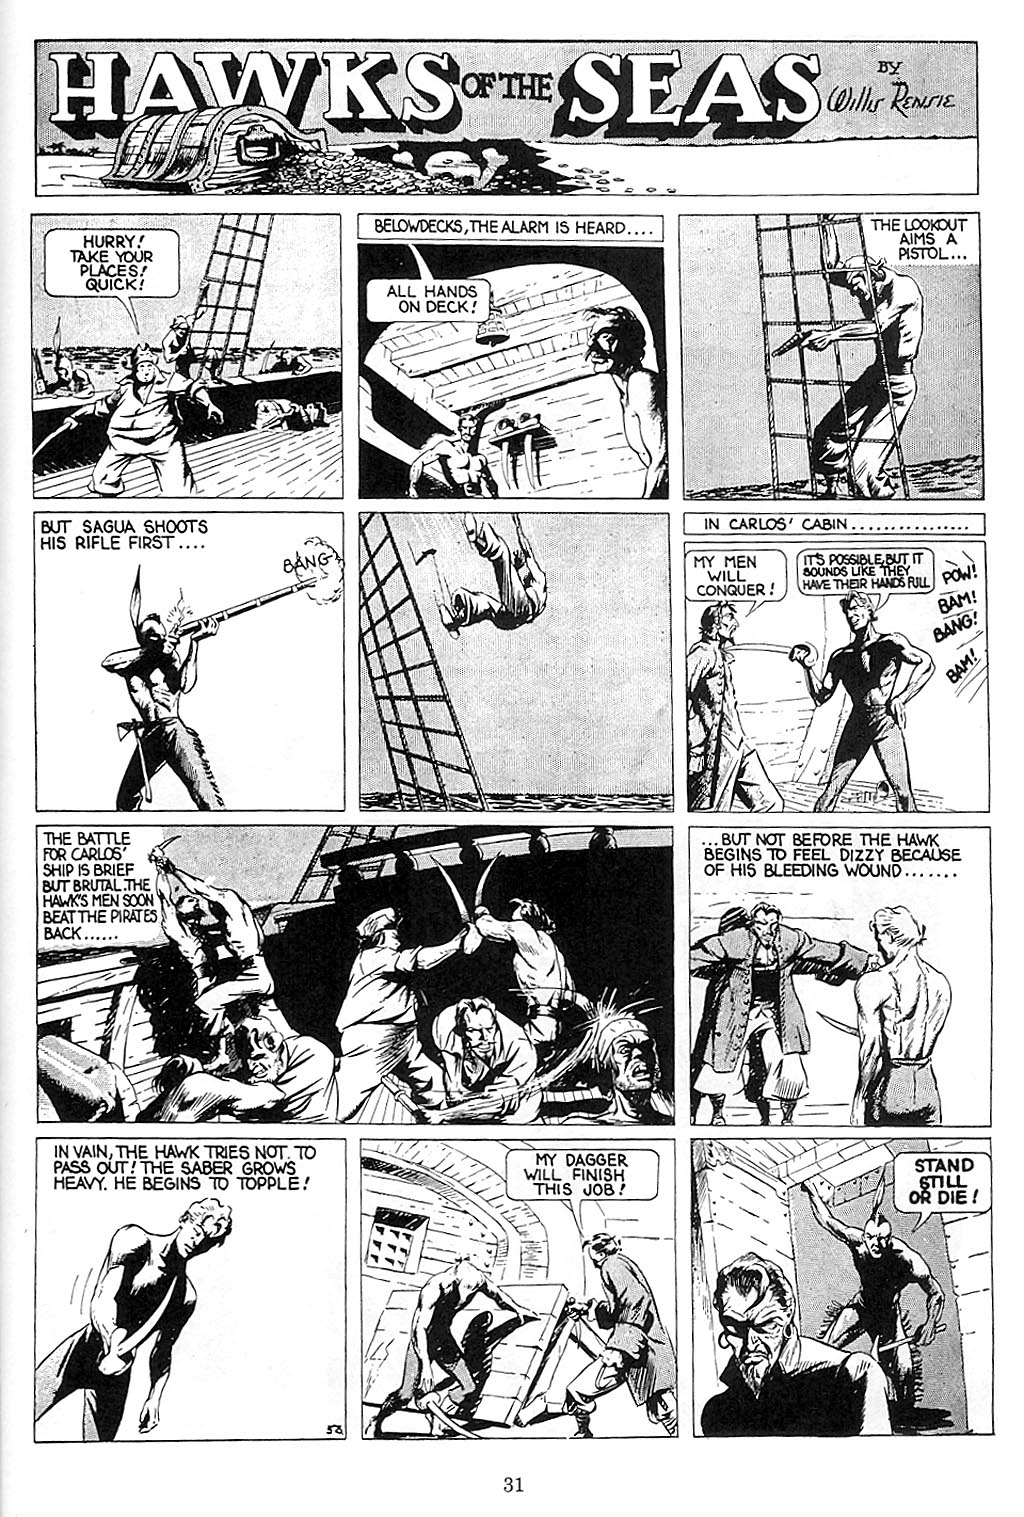 Read online Will Eisner's Hawks of the Seas comic -  Issue # TPB - 32